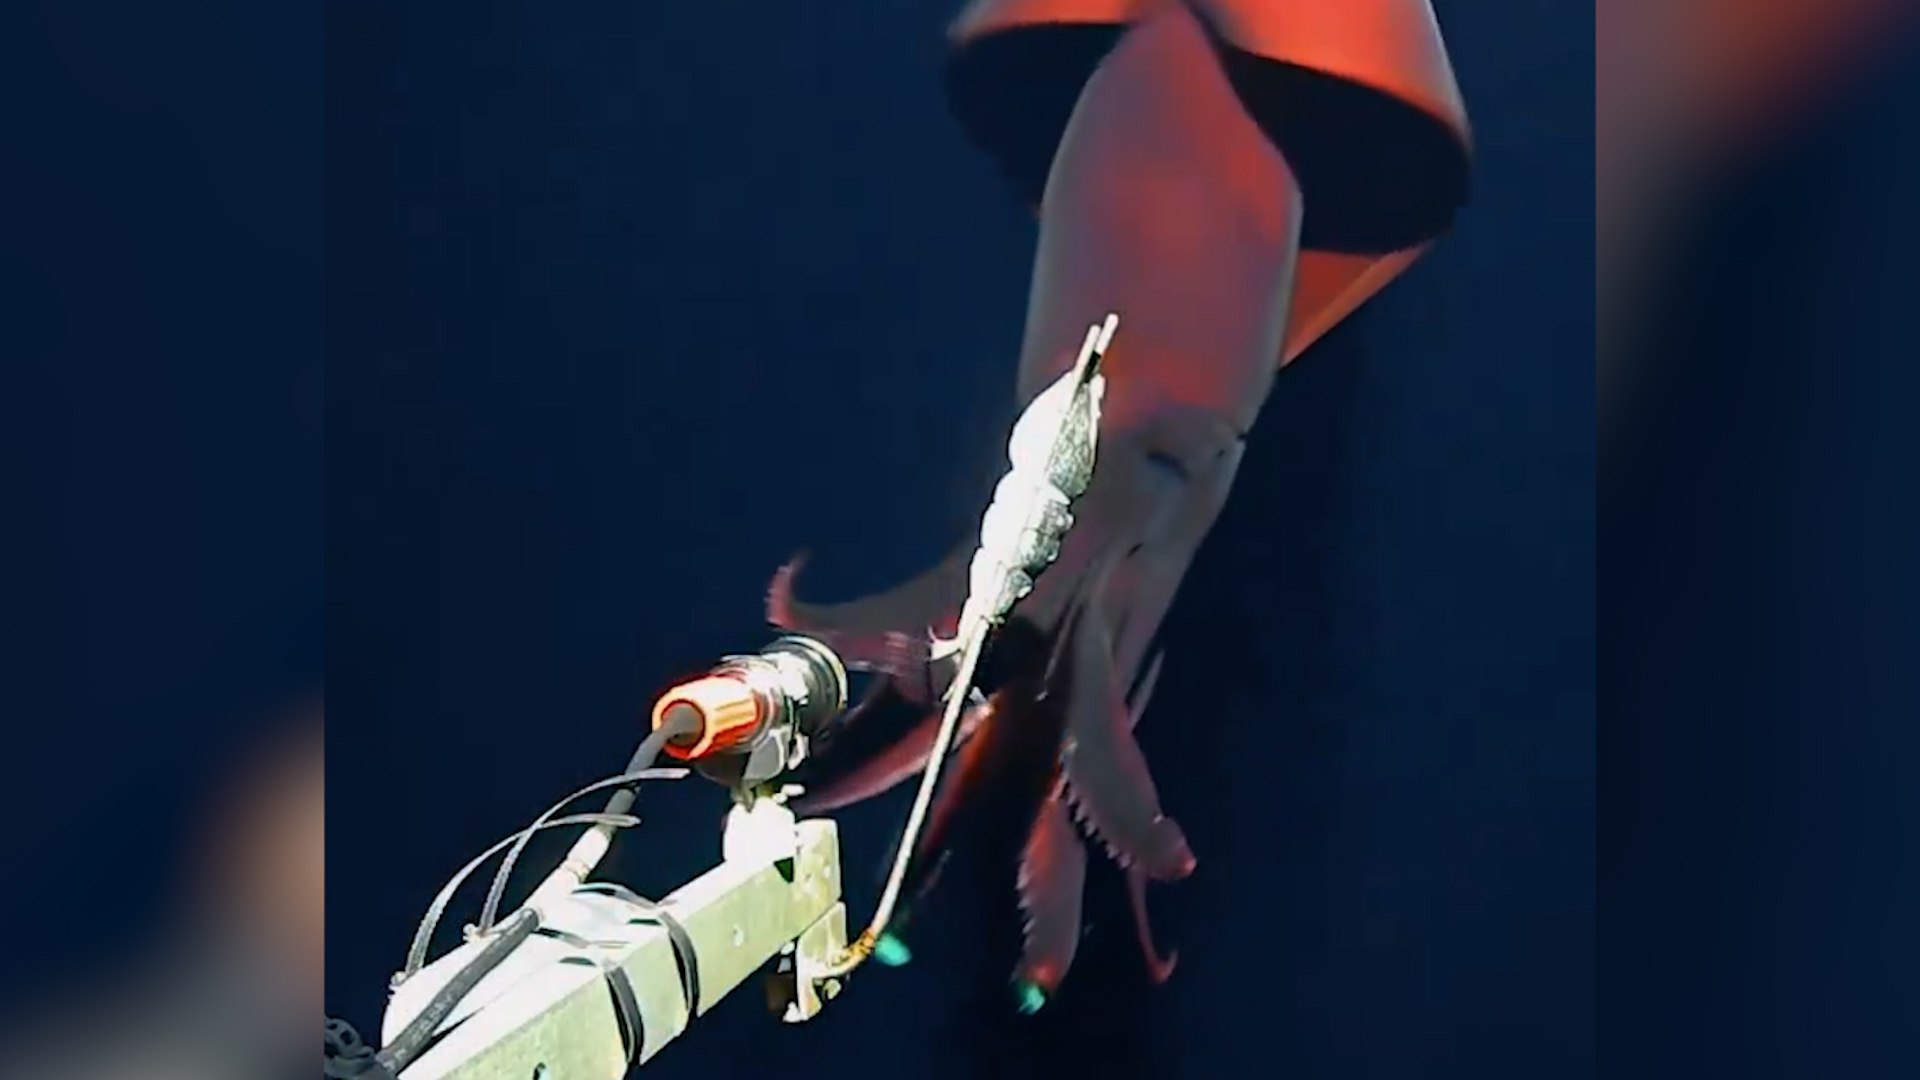 Imgenes inditas de un enorme calamar extremadamente raro que emite luces